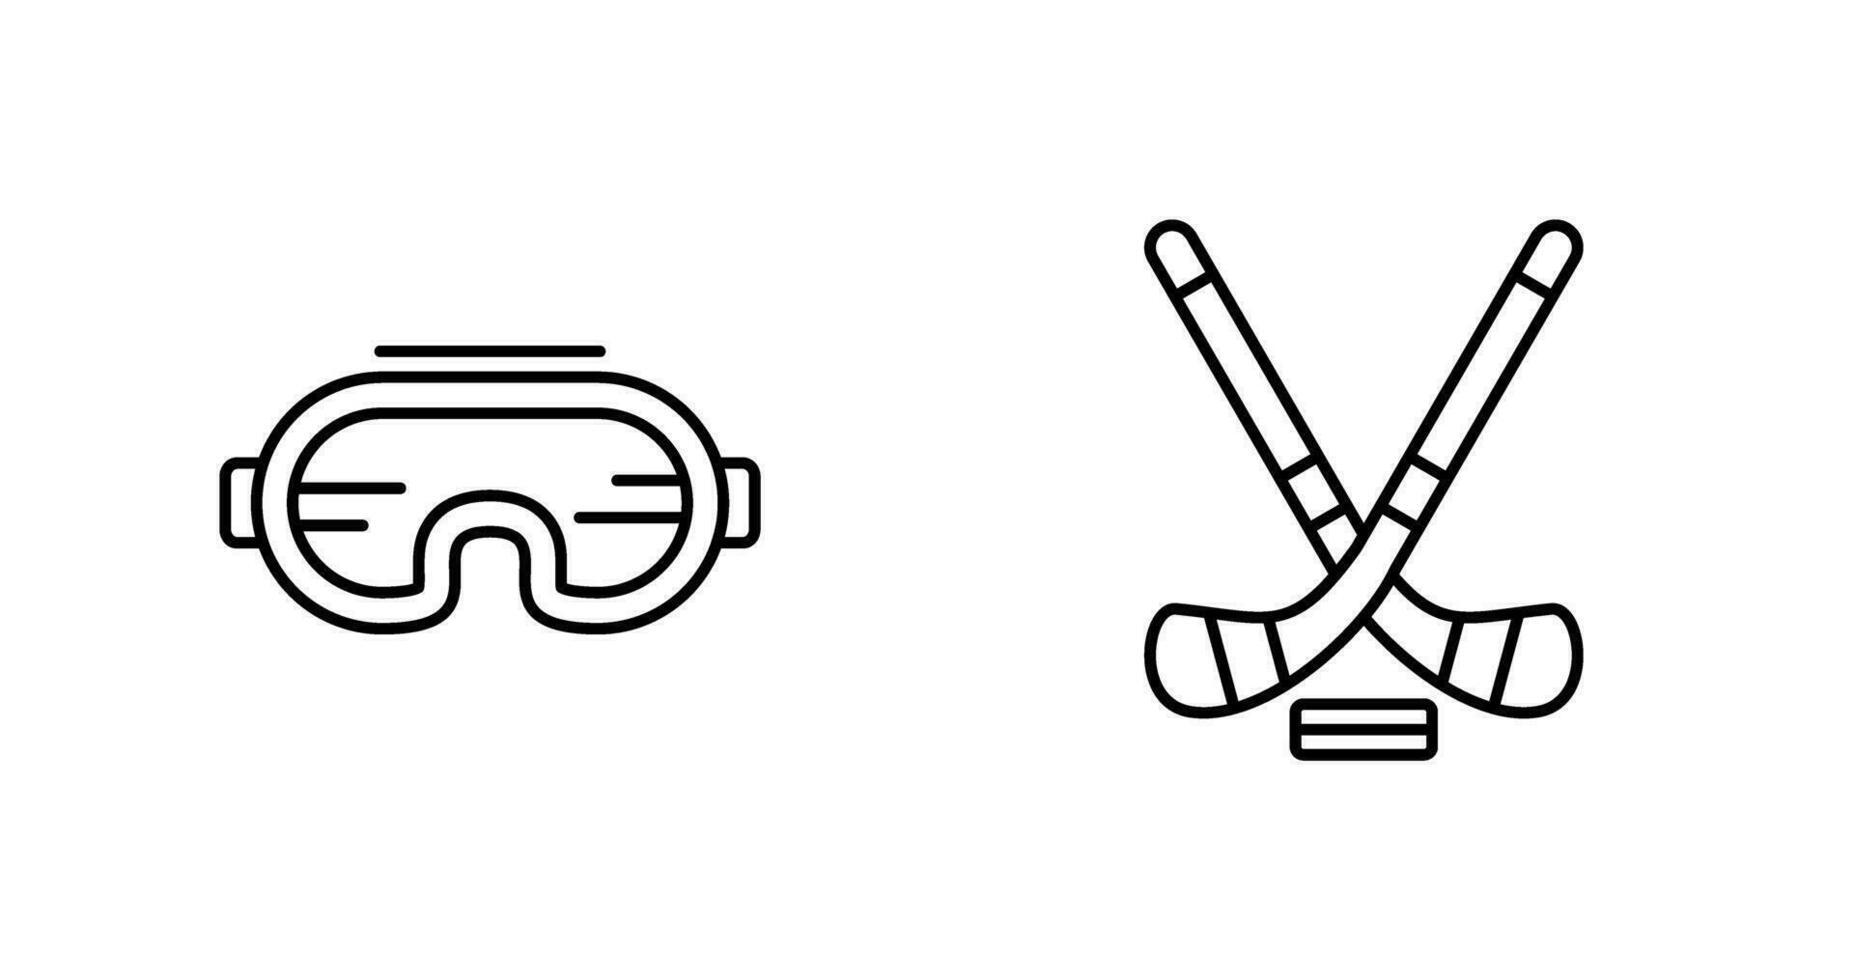 Goggle und Eis Eishockey Symbol vektor